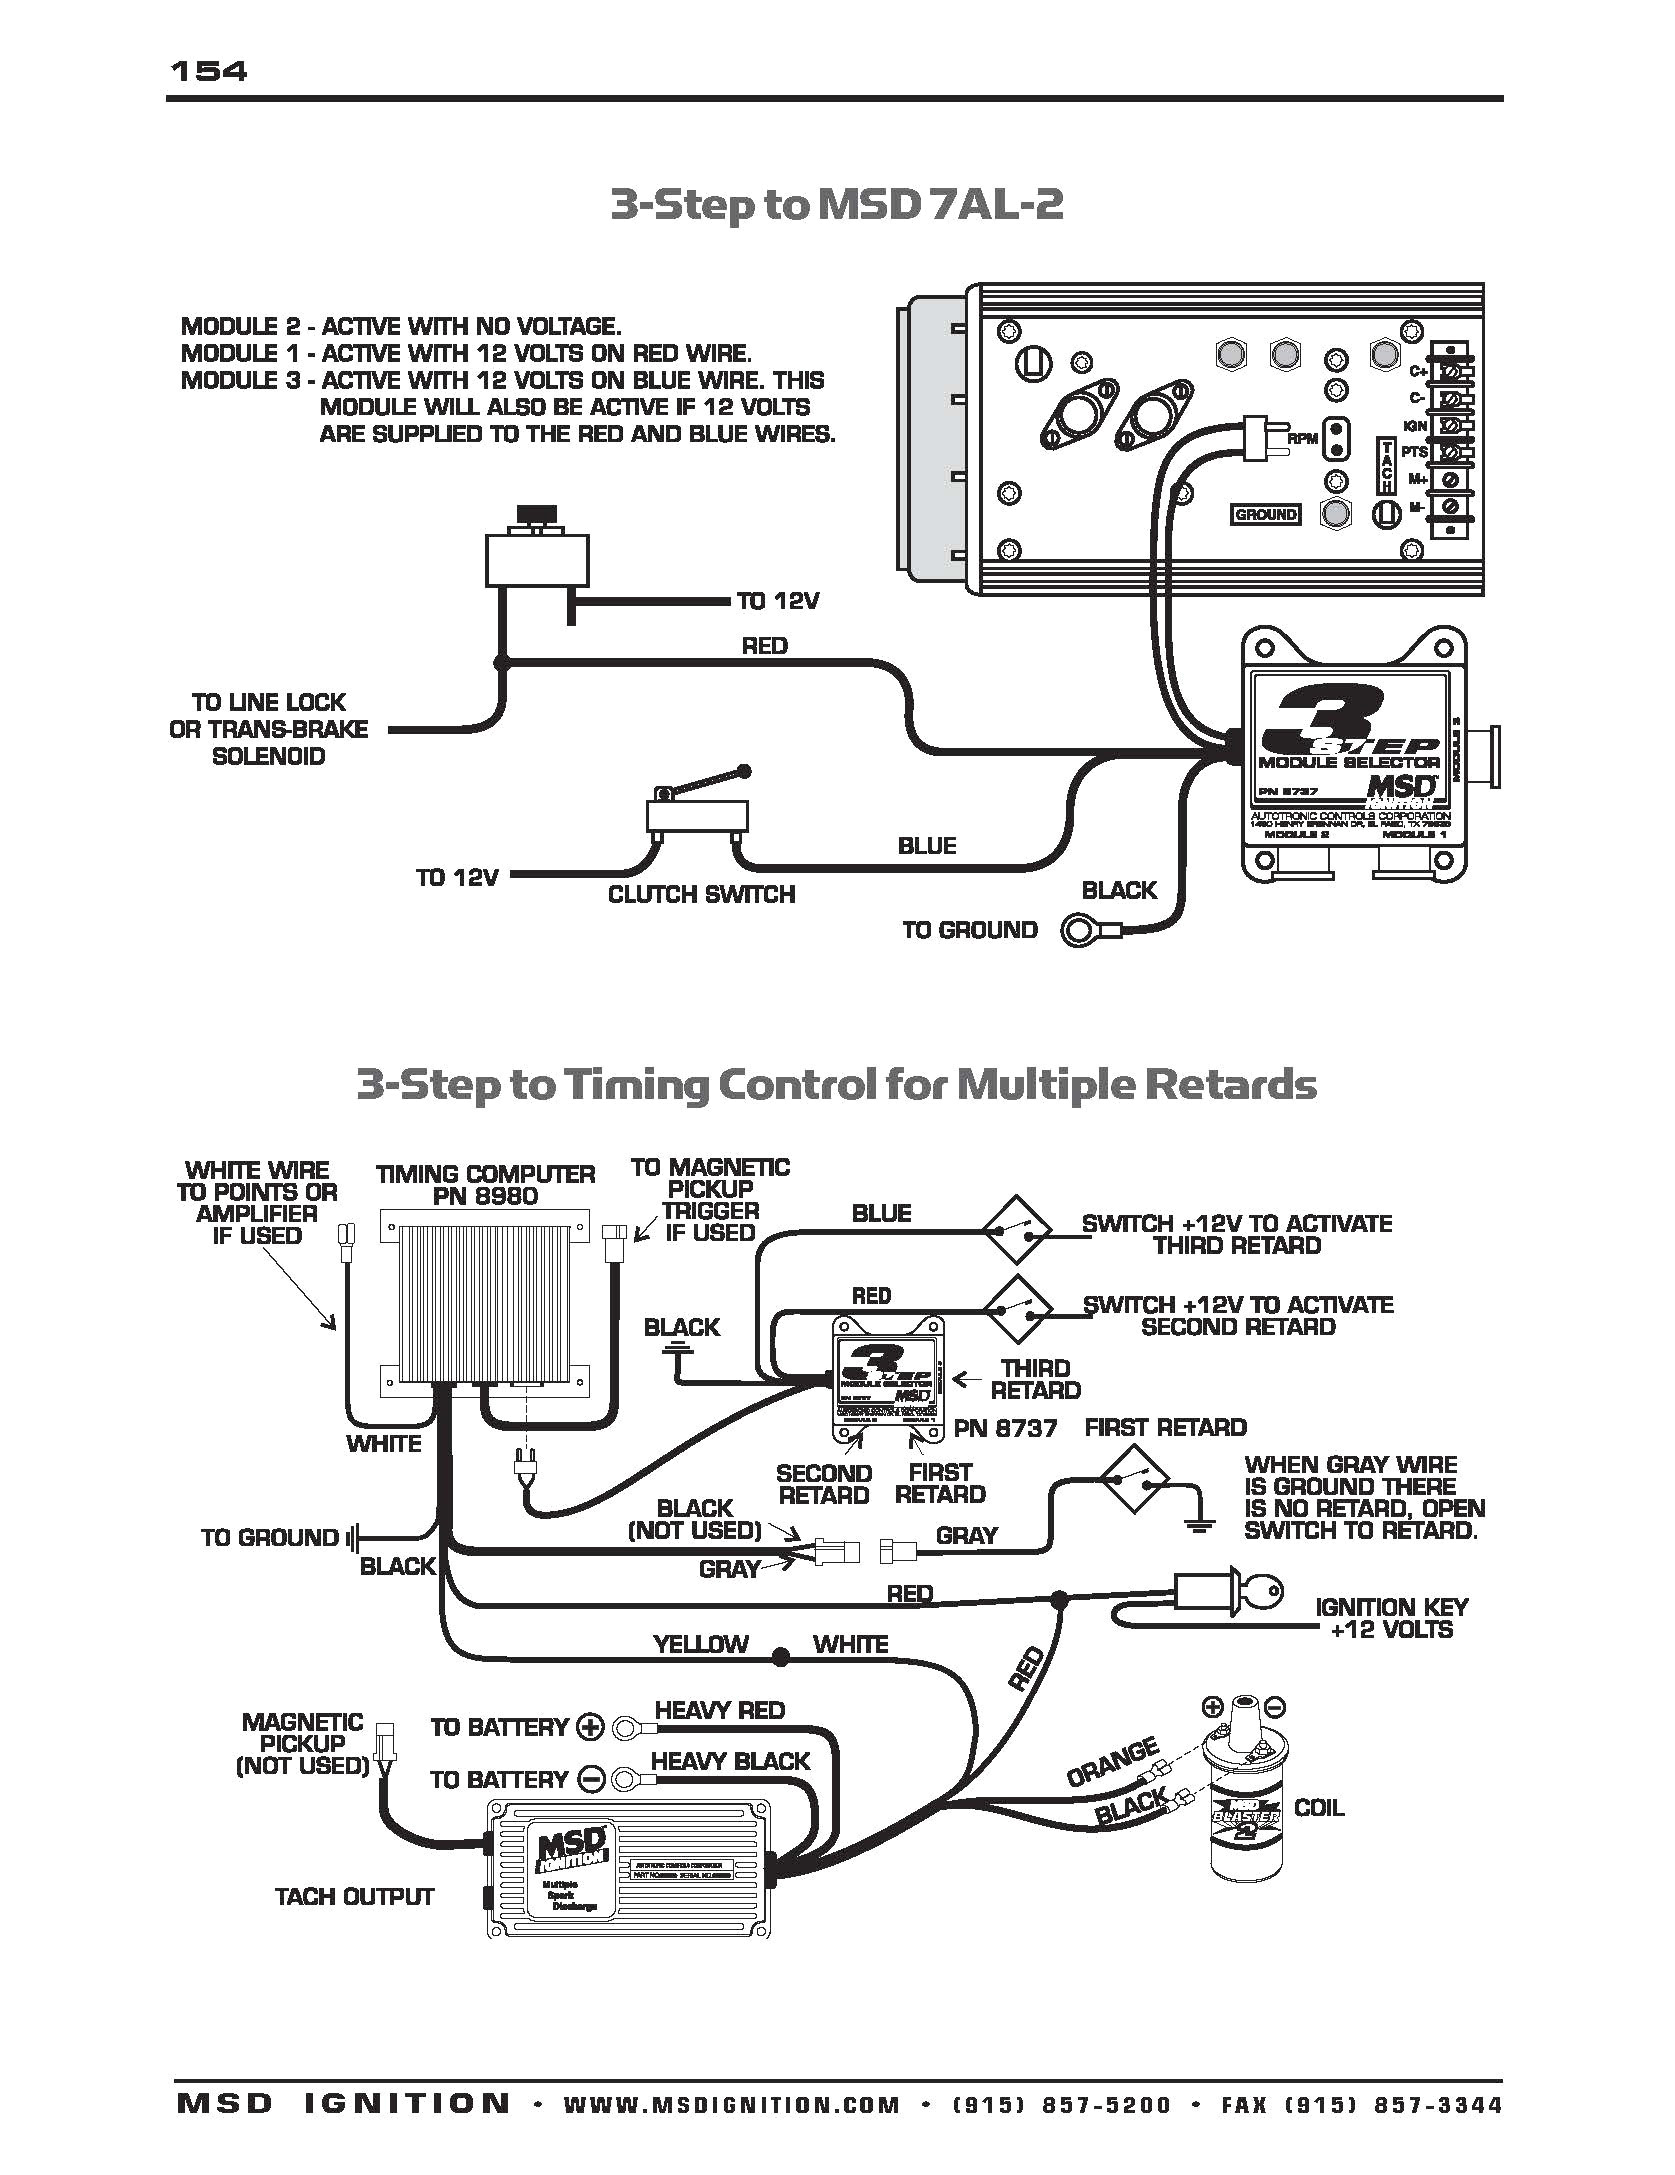 msd 7al wiring diagram wiring diagram centre msd 7al 2 wiring diagram